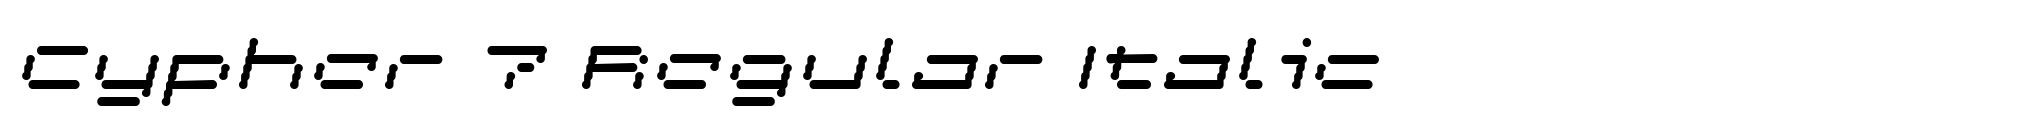 Cypher 7 Regular Italic image